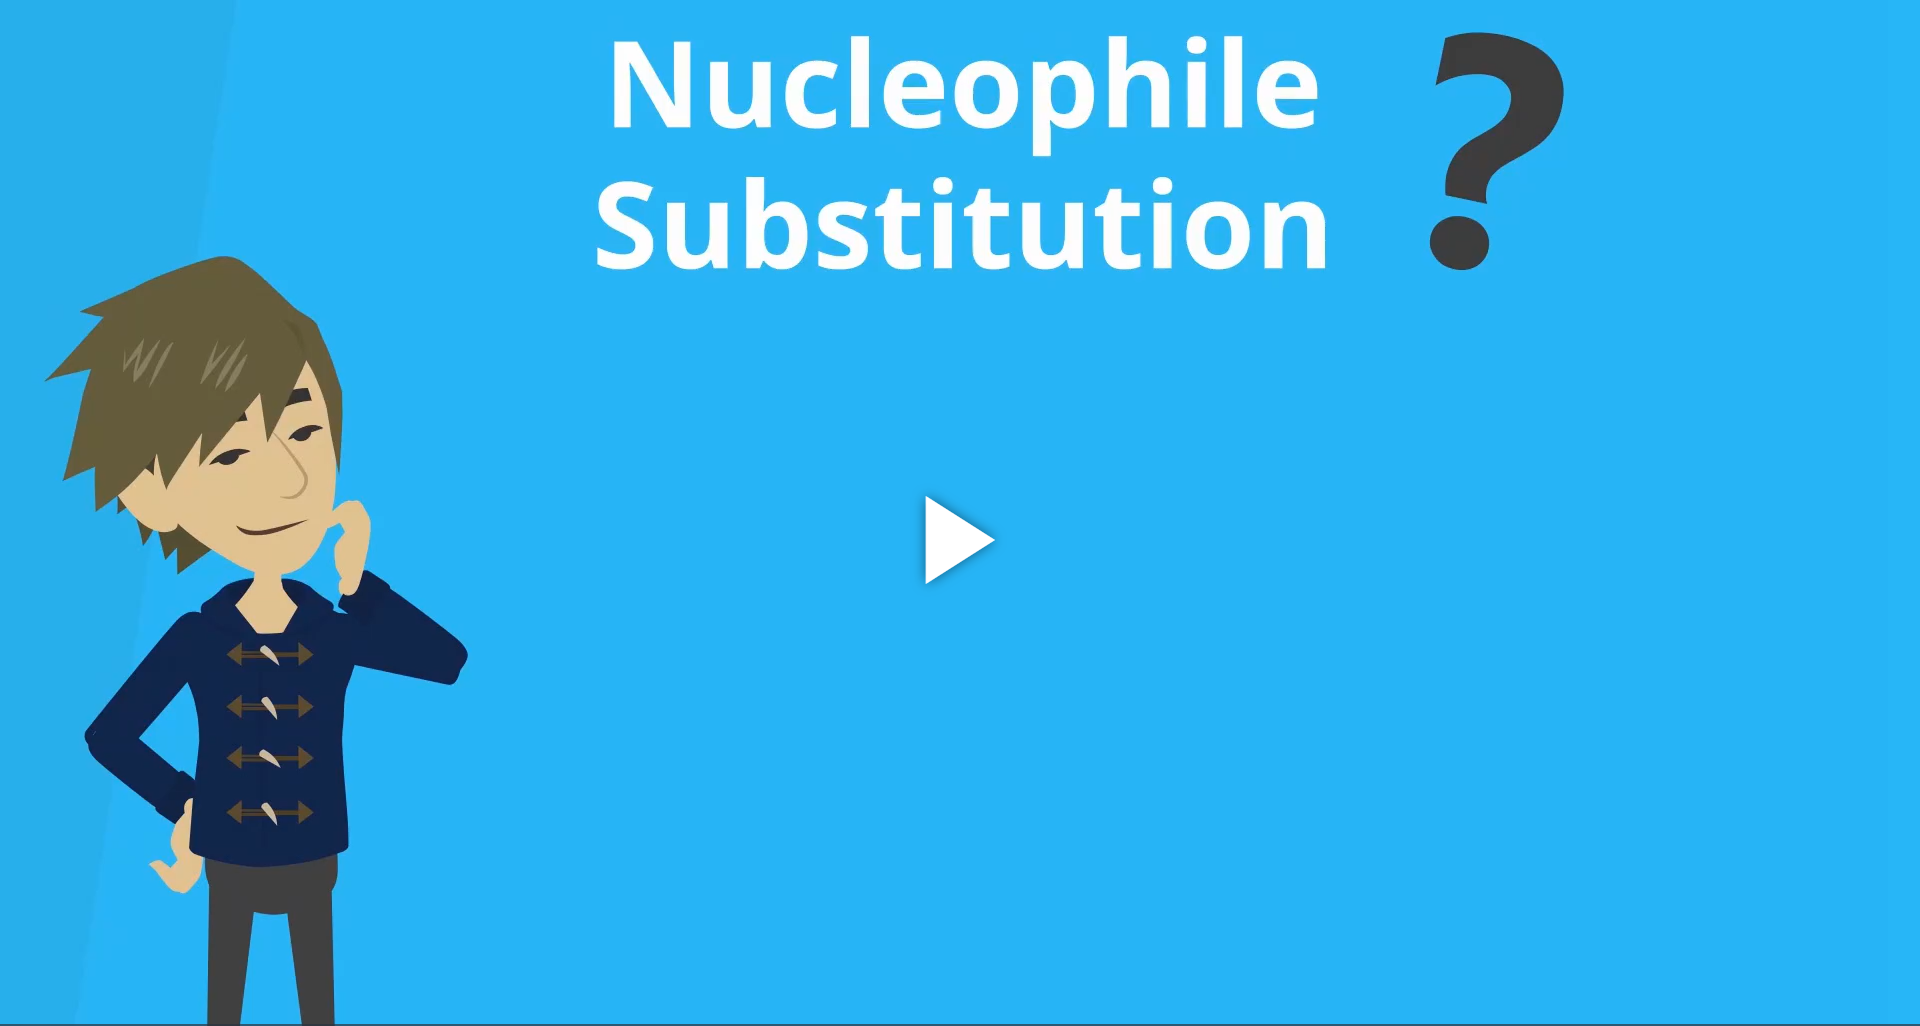 erkl-rvideo-nucleophile-substitution-raabits-online